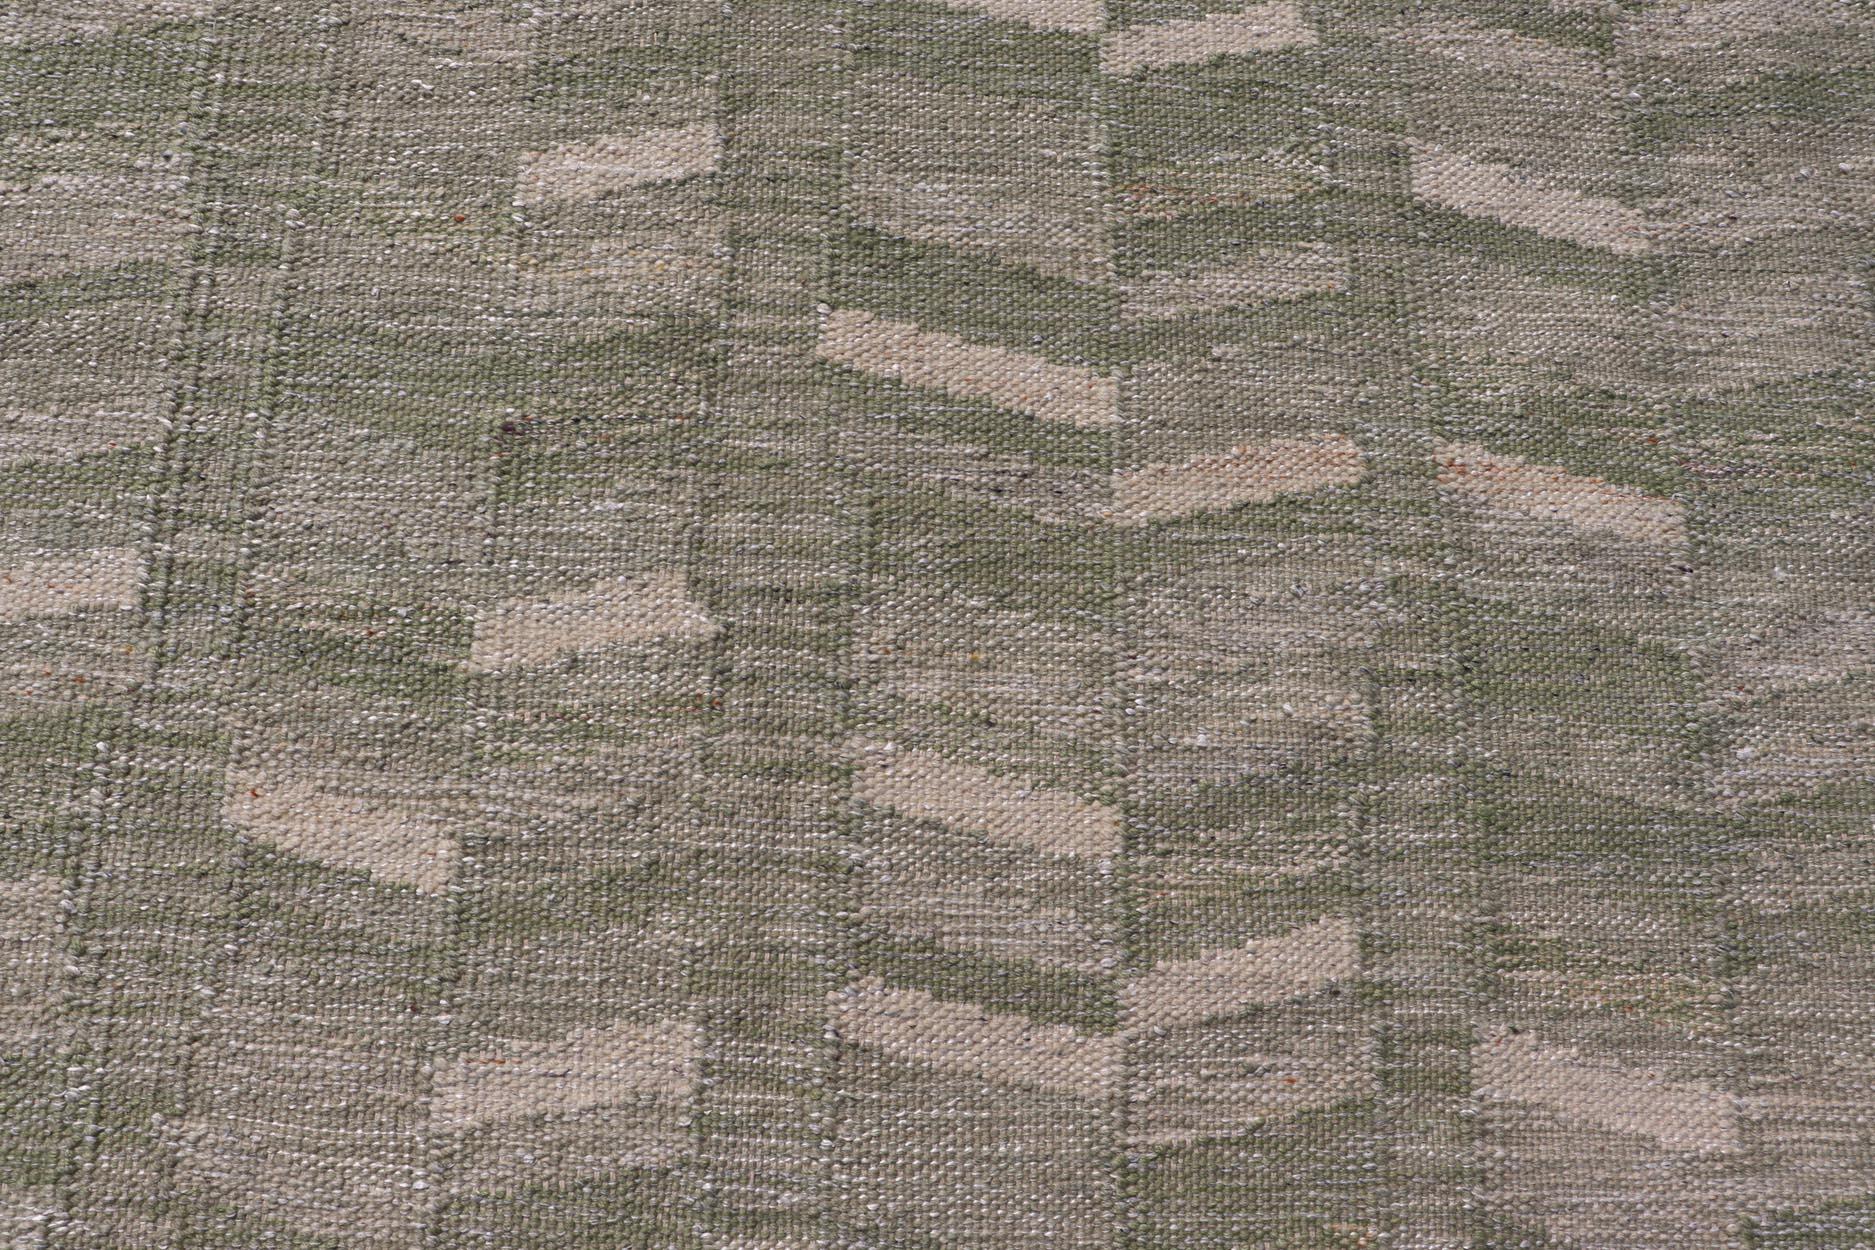 Modern Scandinavian/Swedish Flat Weave Geometric Design Rug in Green Tones In New Condition For Sale In Atlanta, GA